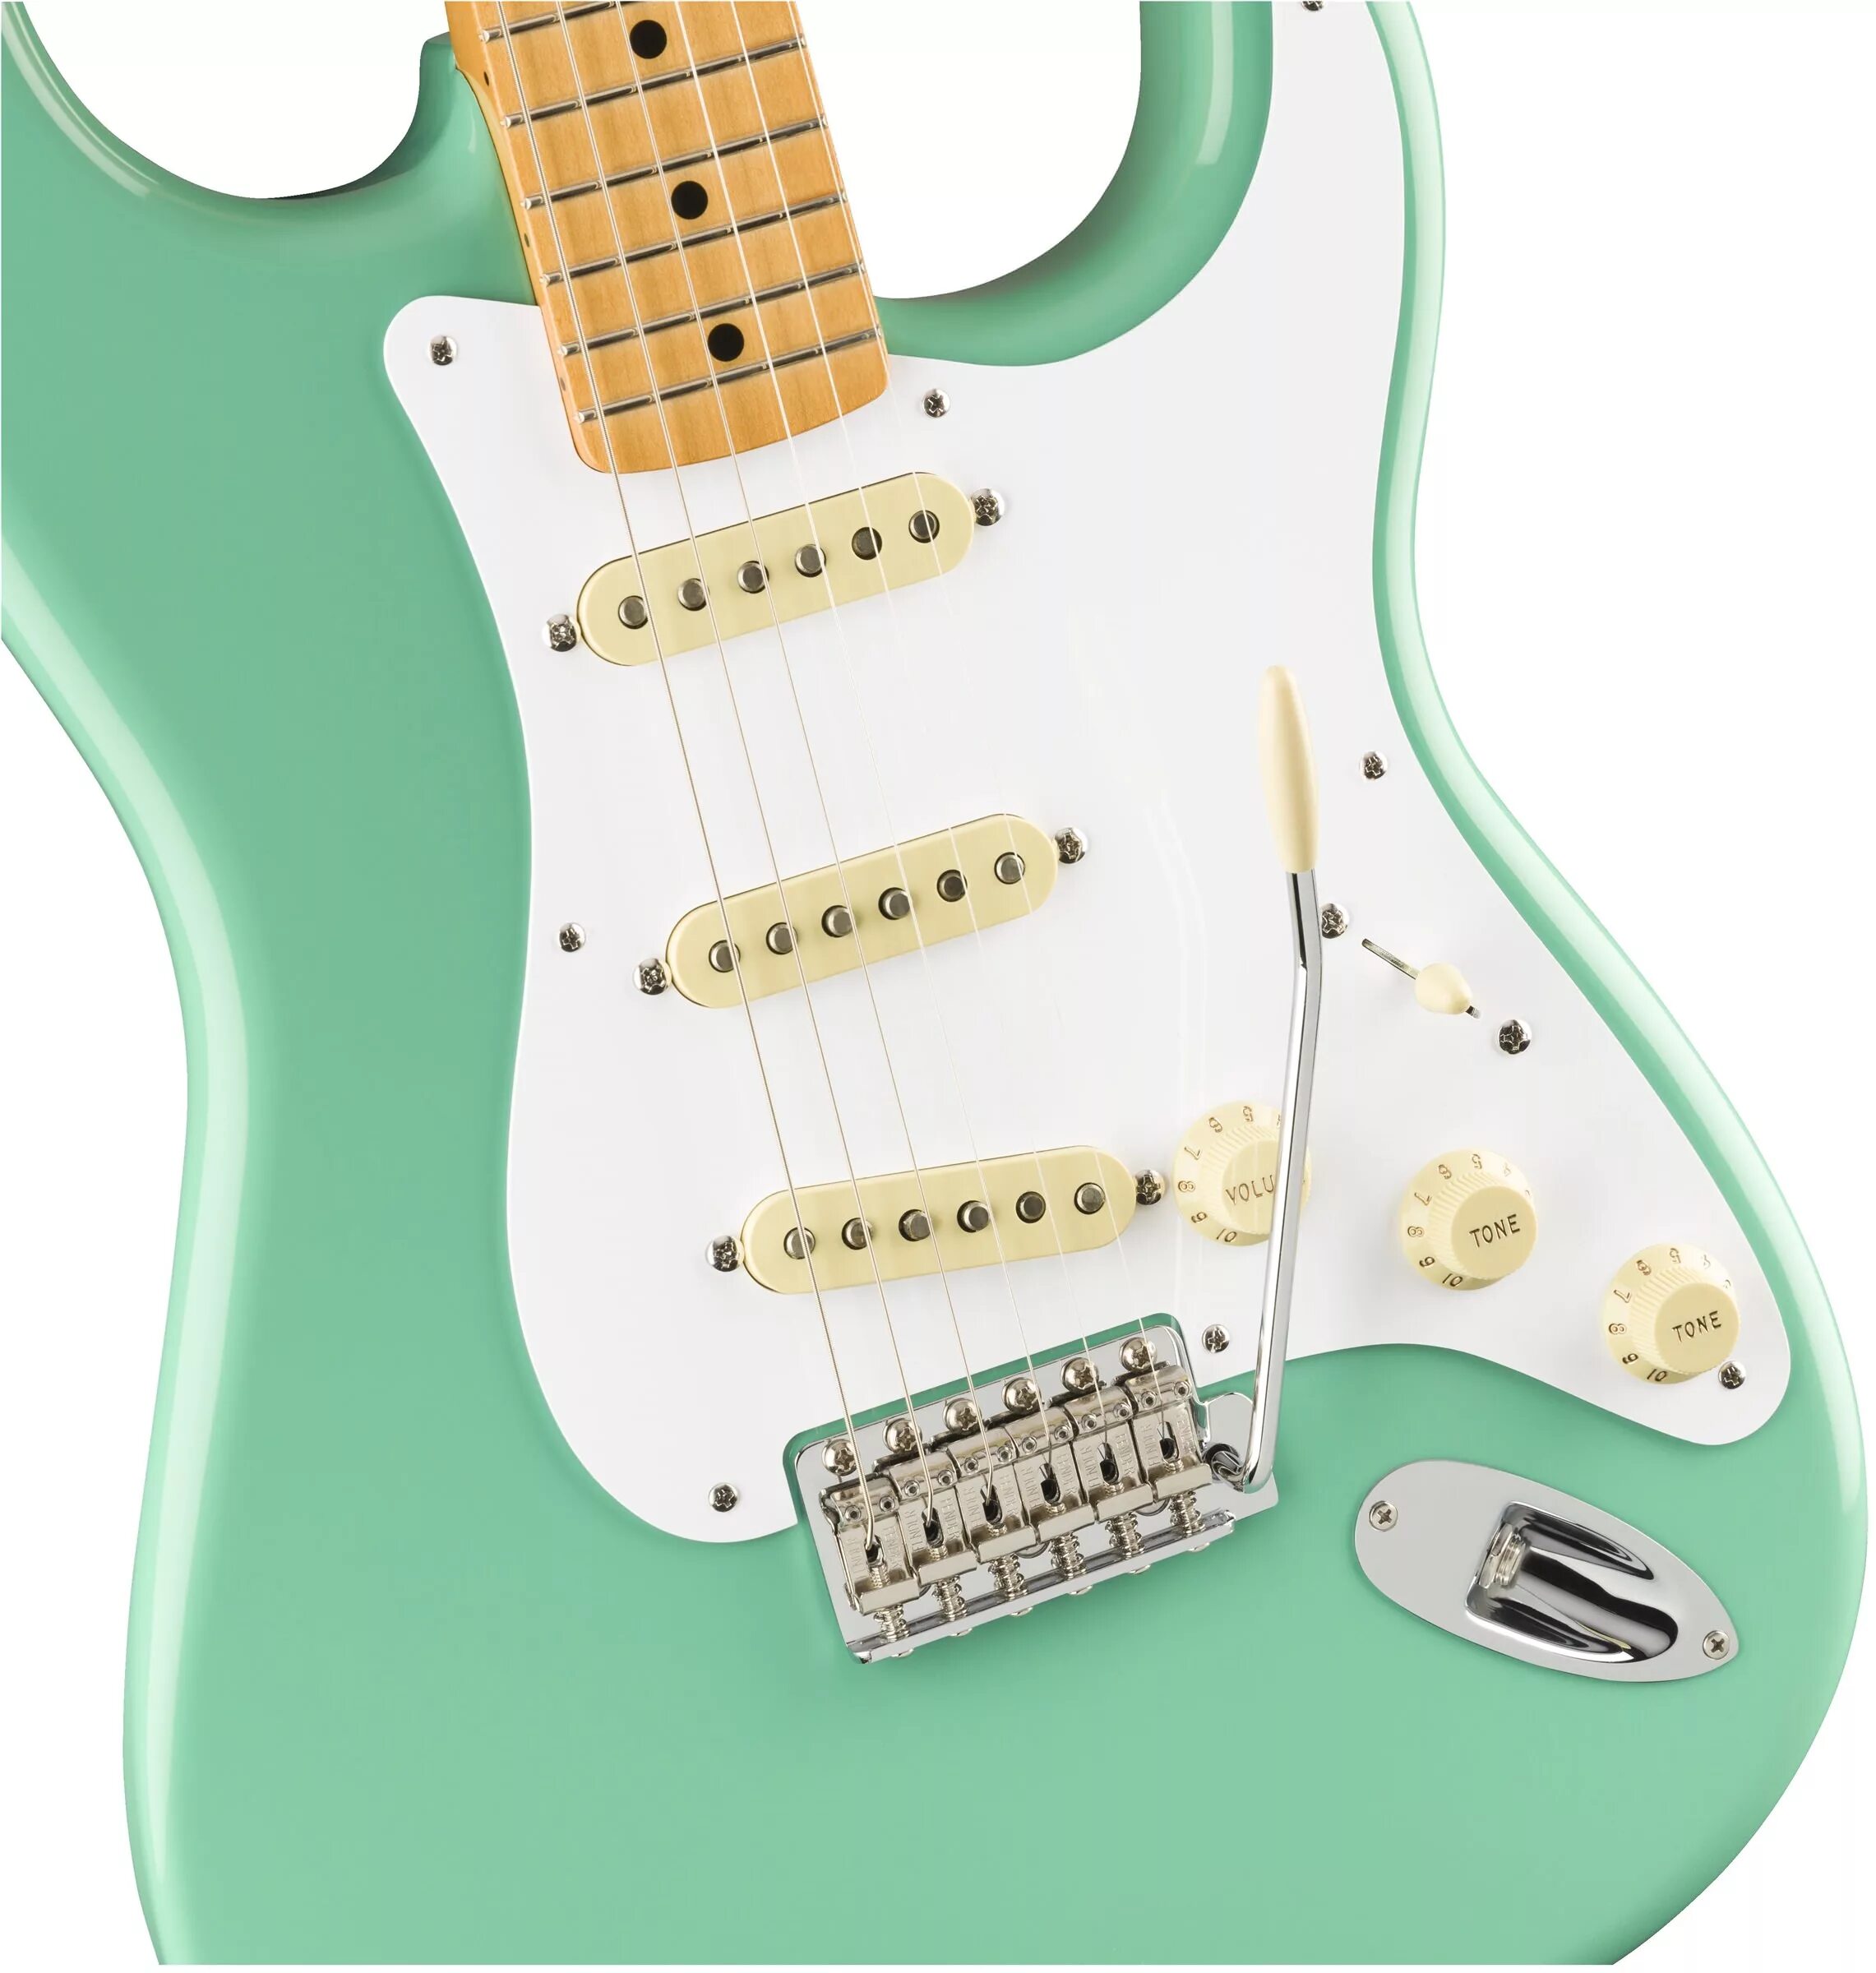 Электрогитара Fender Stratocaster. Гитара Фендер стратокастер. Электрогитара Fender American professional Stratocaster. Stratocaster Sea Foam Green.